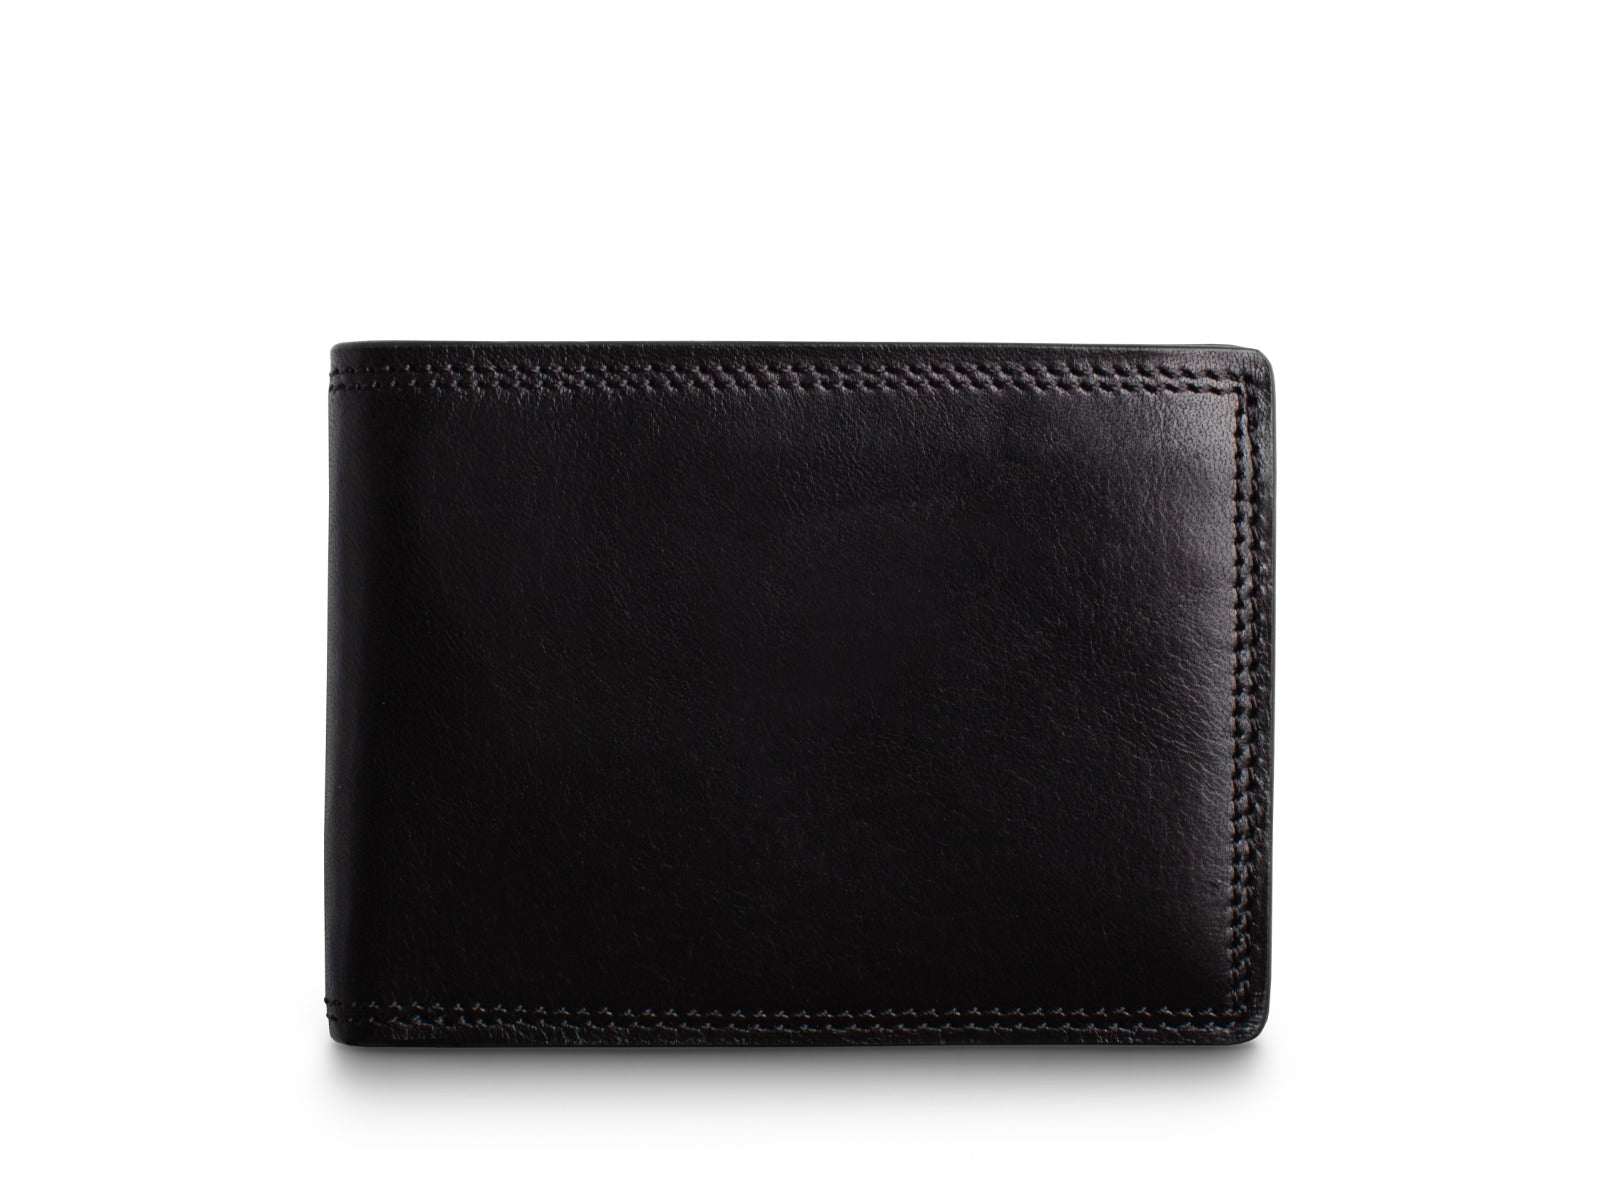 Bosca Men's Small Bifold Leather Wallet